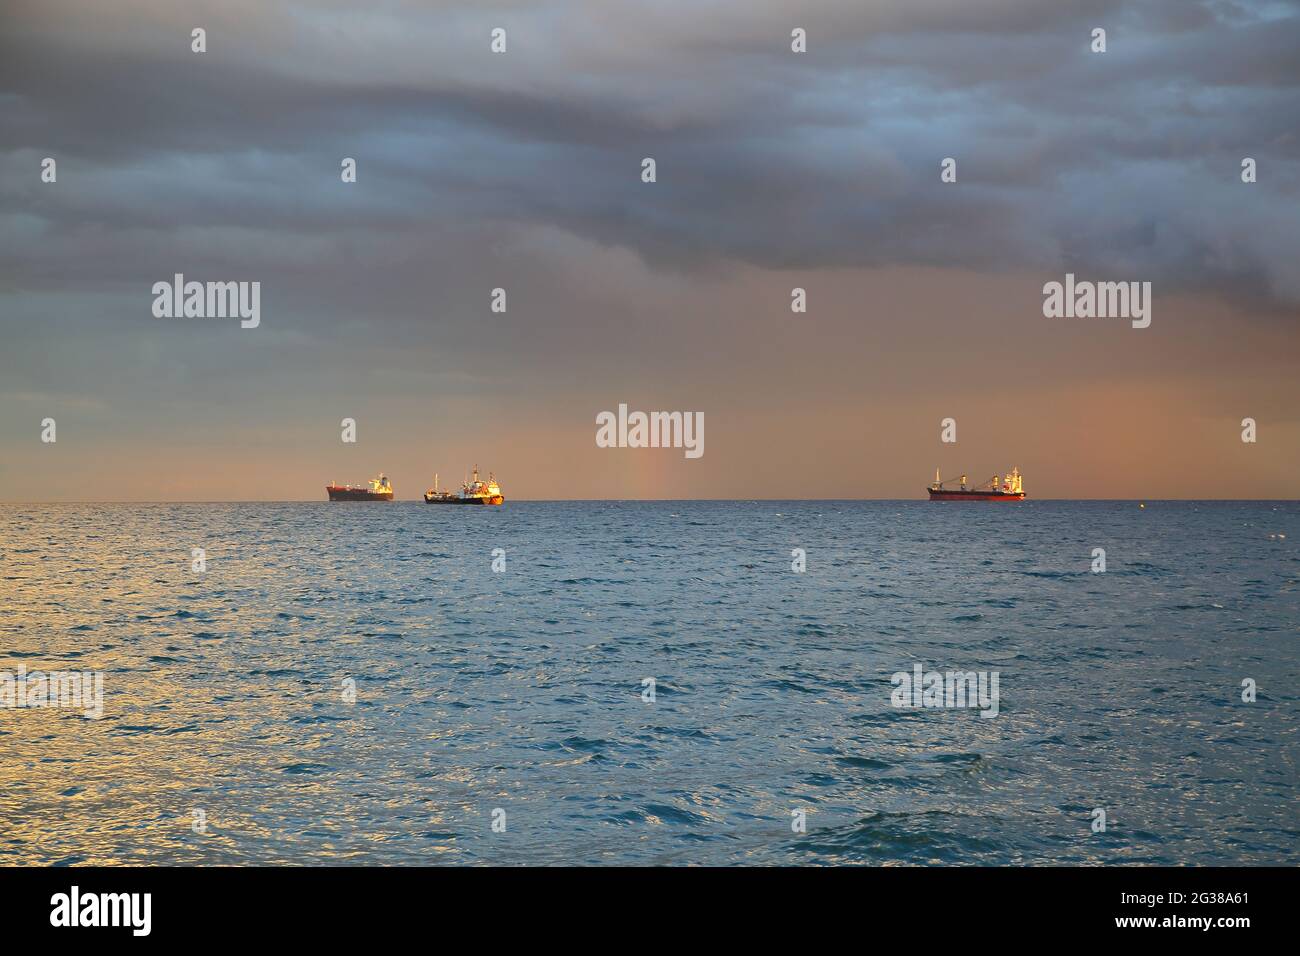 Mediterranean sea, three ships on horizon, heavy swirling clouds in teh sky Stock Photo